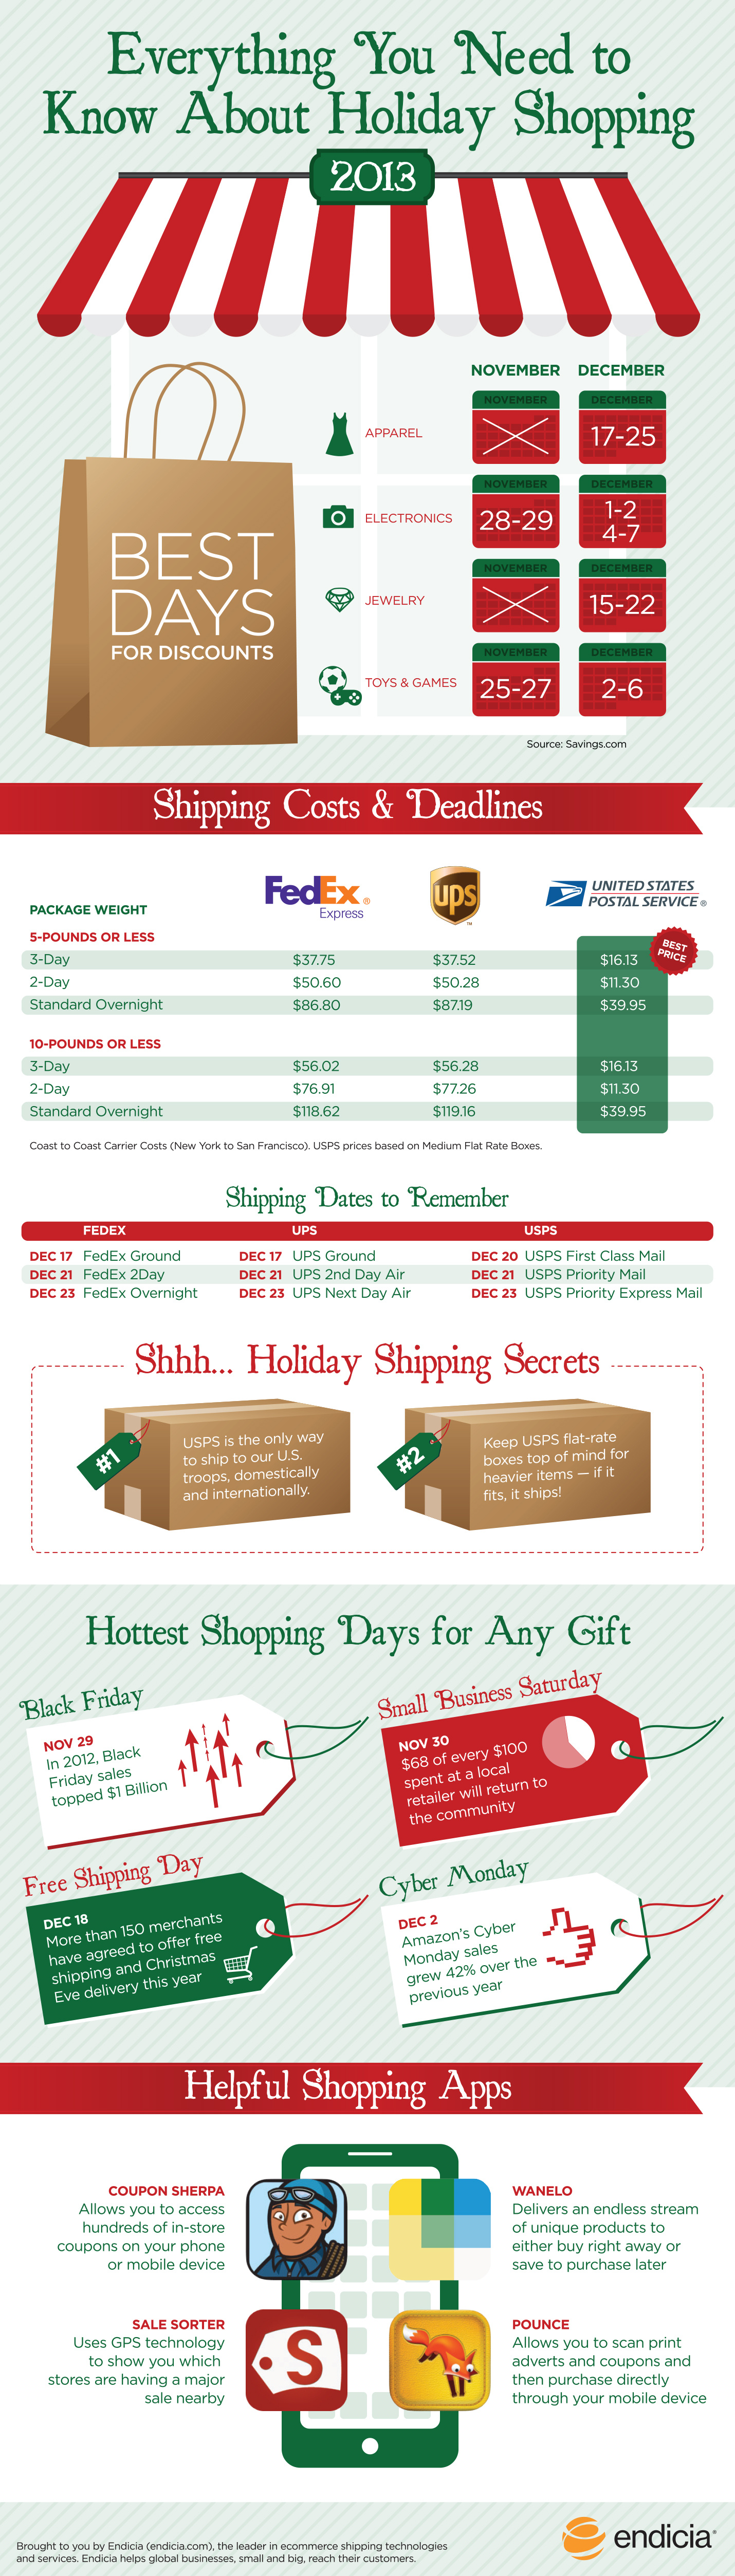 Endicia_holiday_infographic